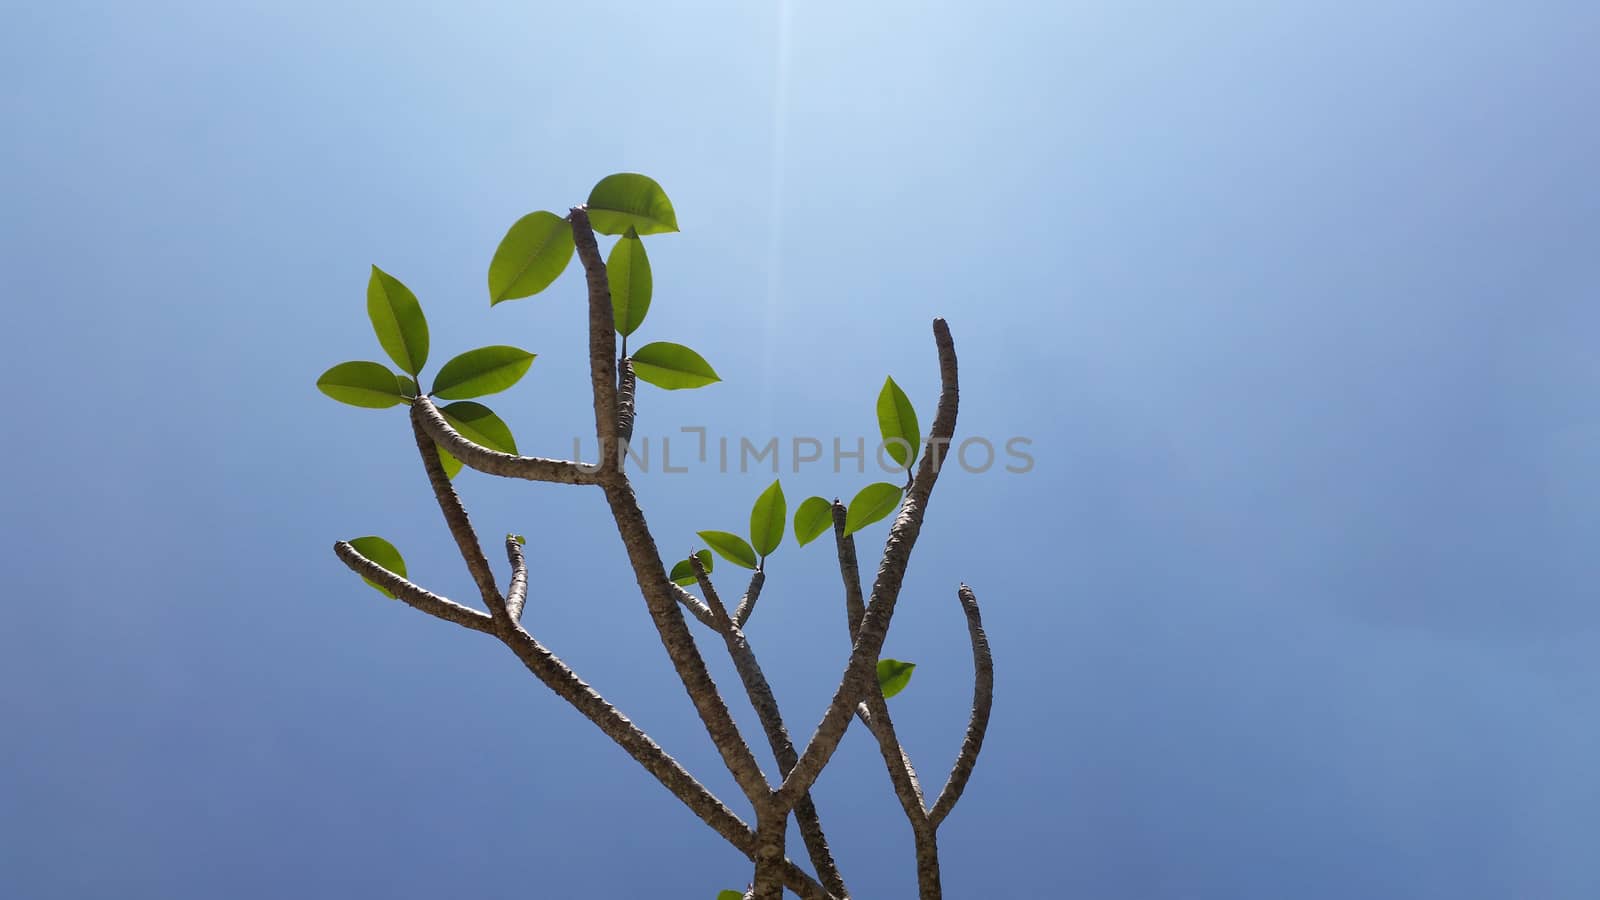 Frangipani tree under the clear sky by arraymax